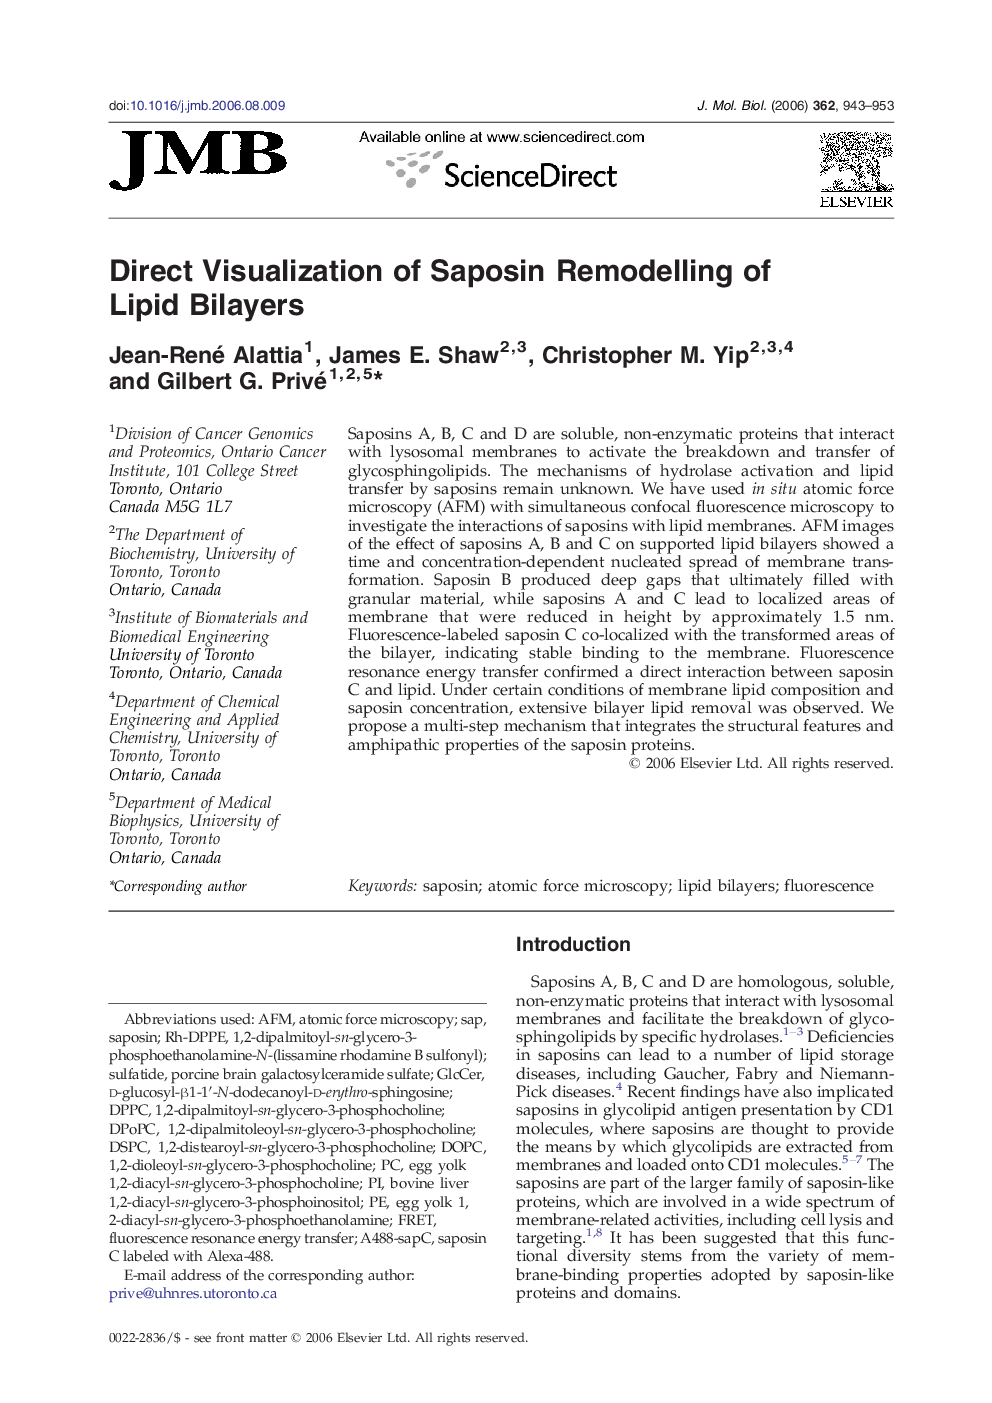 Direct Visualization of Saposin Remodelling of Lipid Bilayers